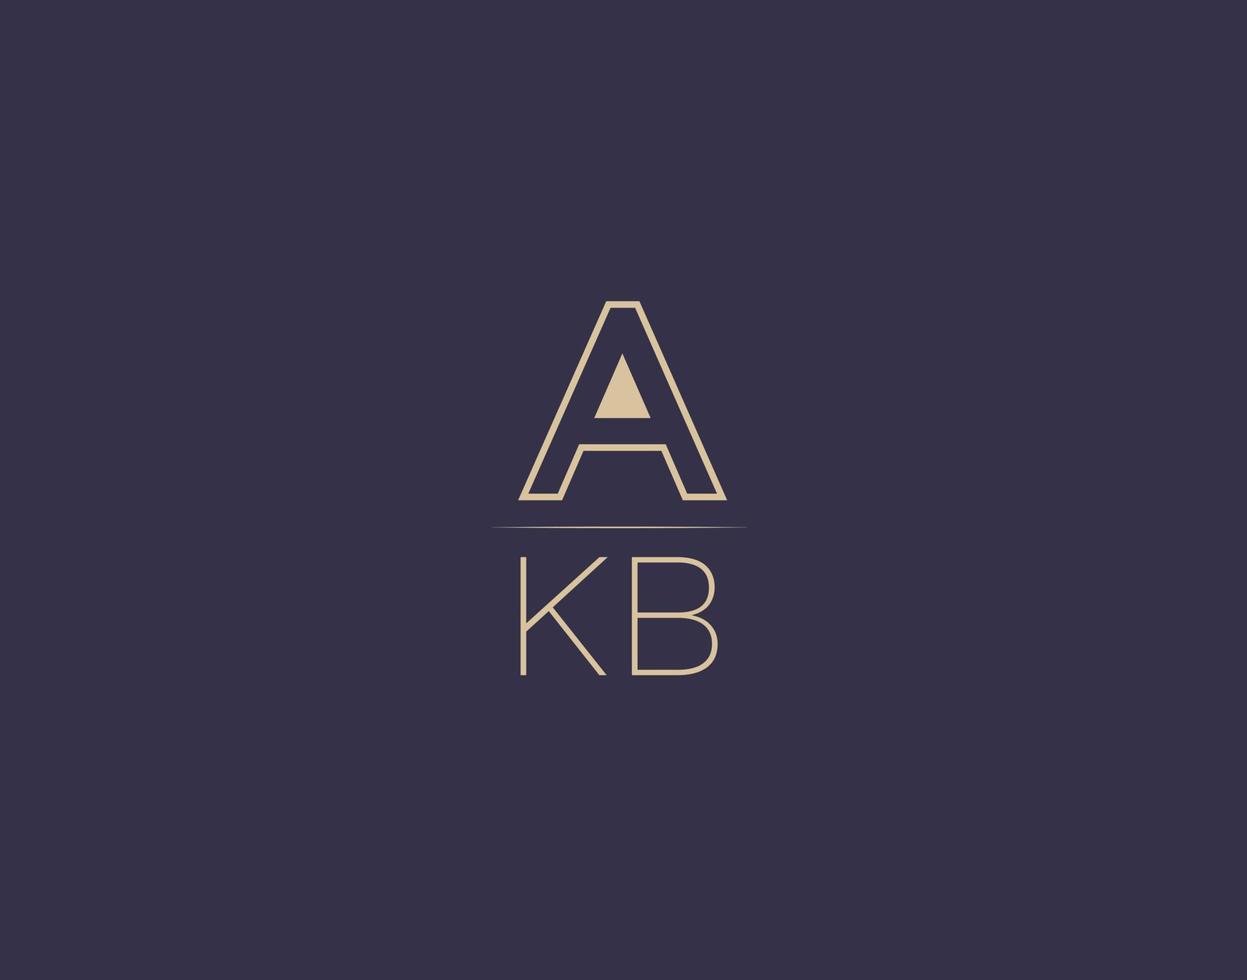 akb brev logotyp design modern minimalistisk vektor bilder